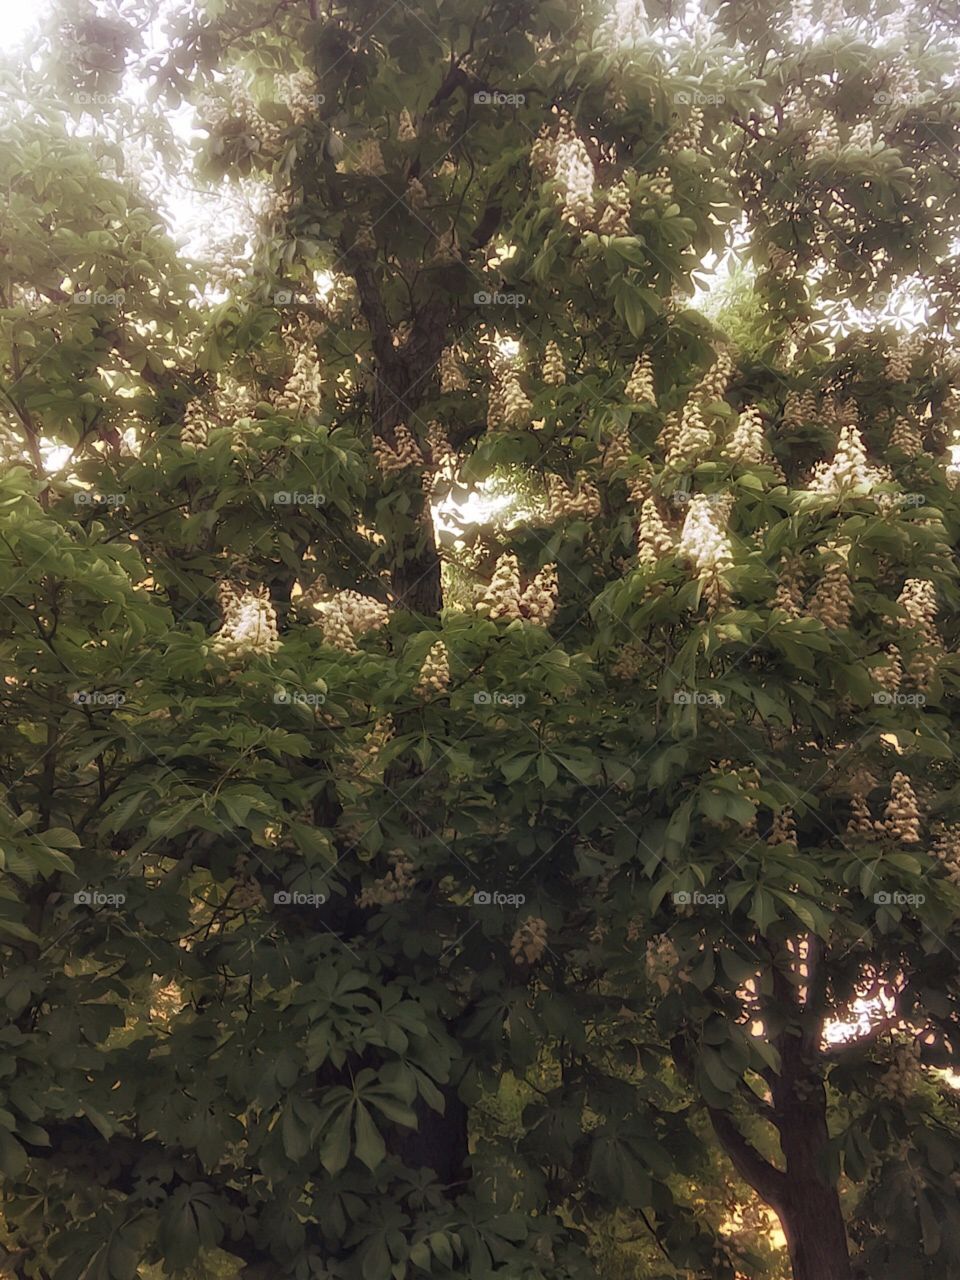 HorseChestnut Tree - Central Park, New York City. Instagram,@PennyPeronto